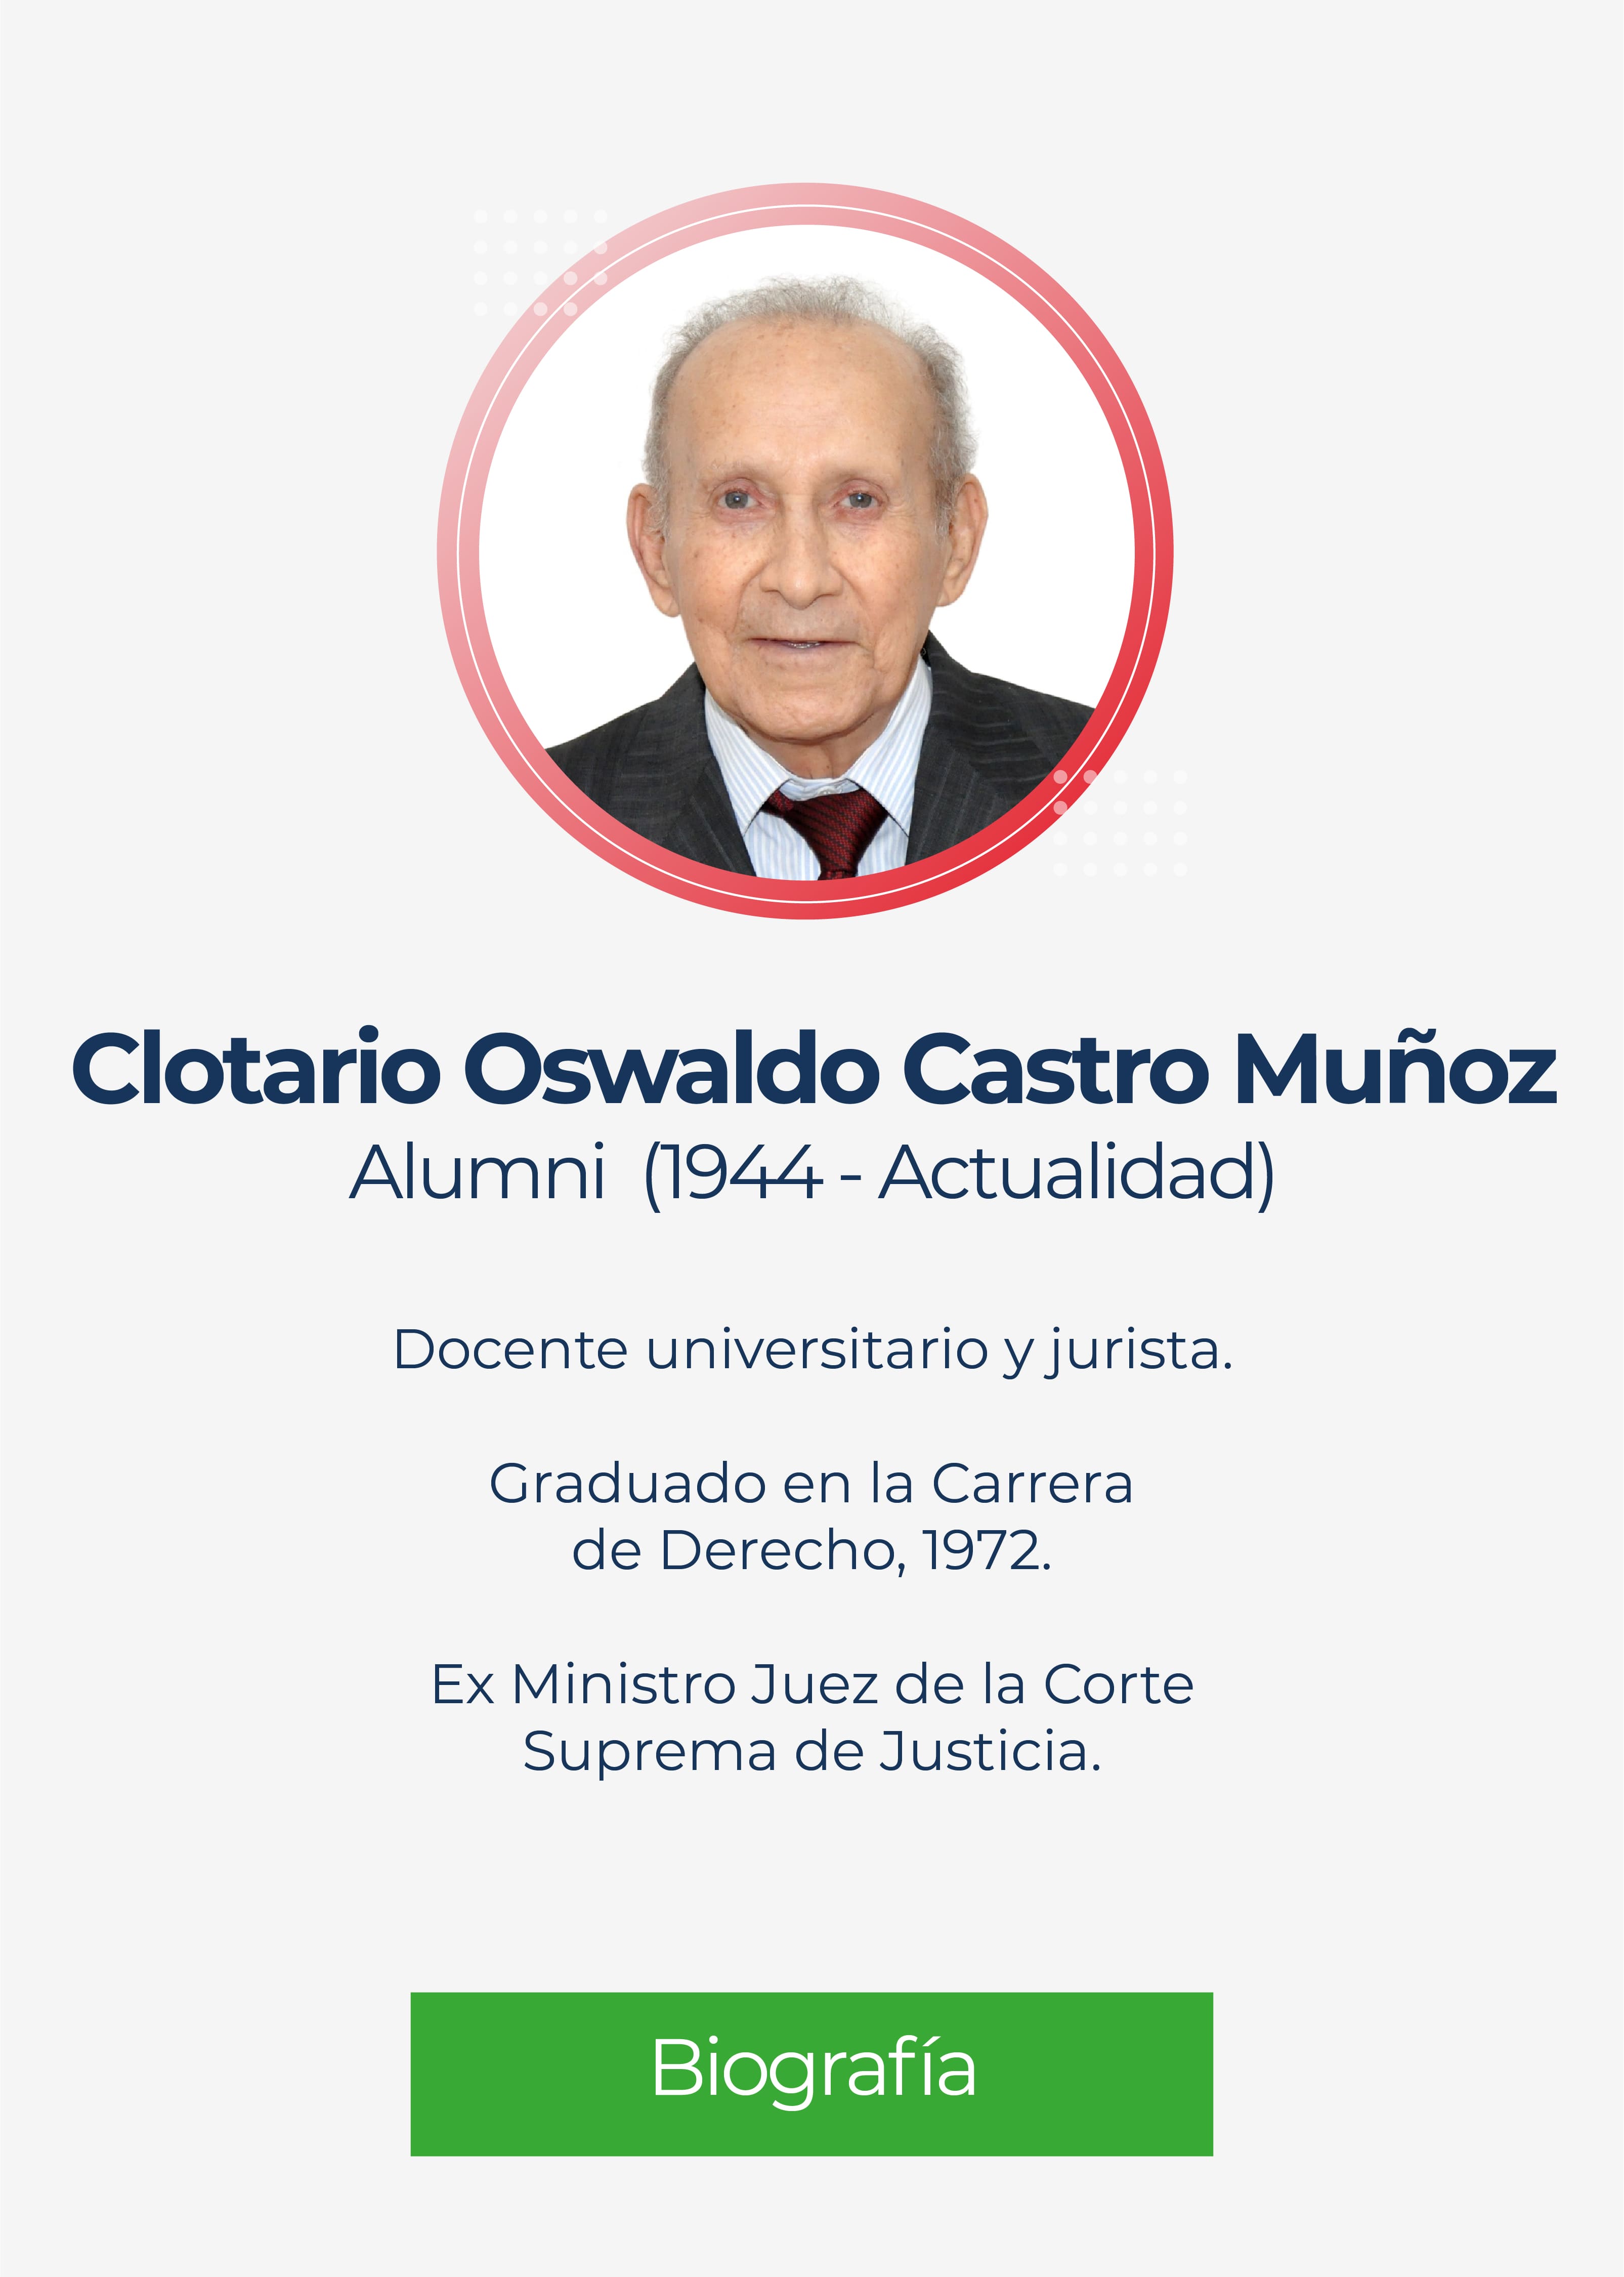 Clotario Oswaldo Castro Muñoz